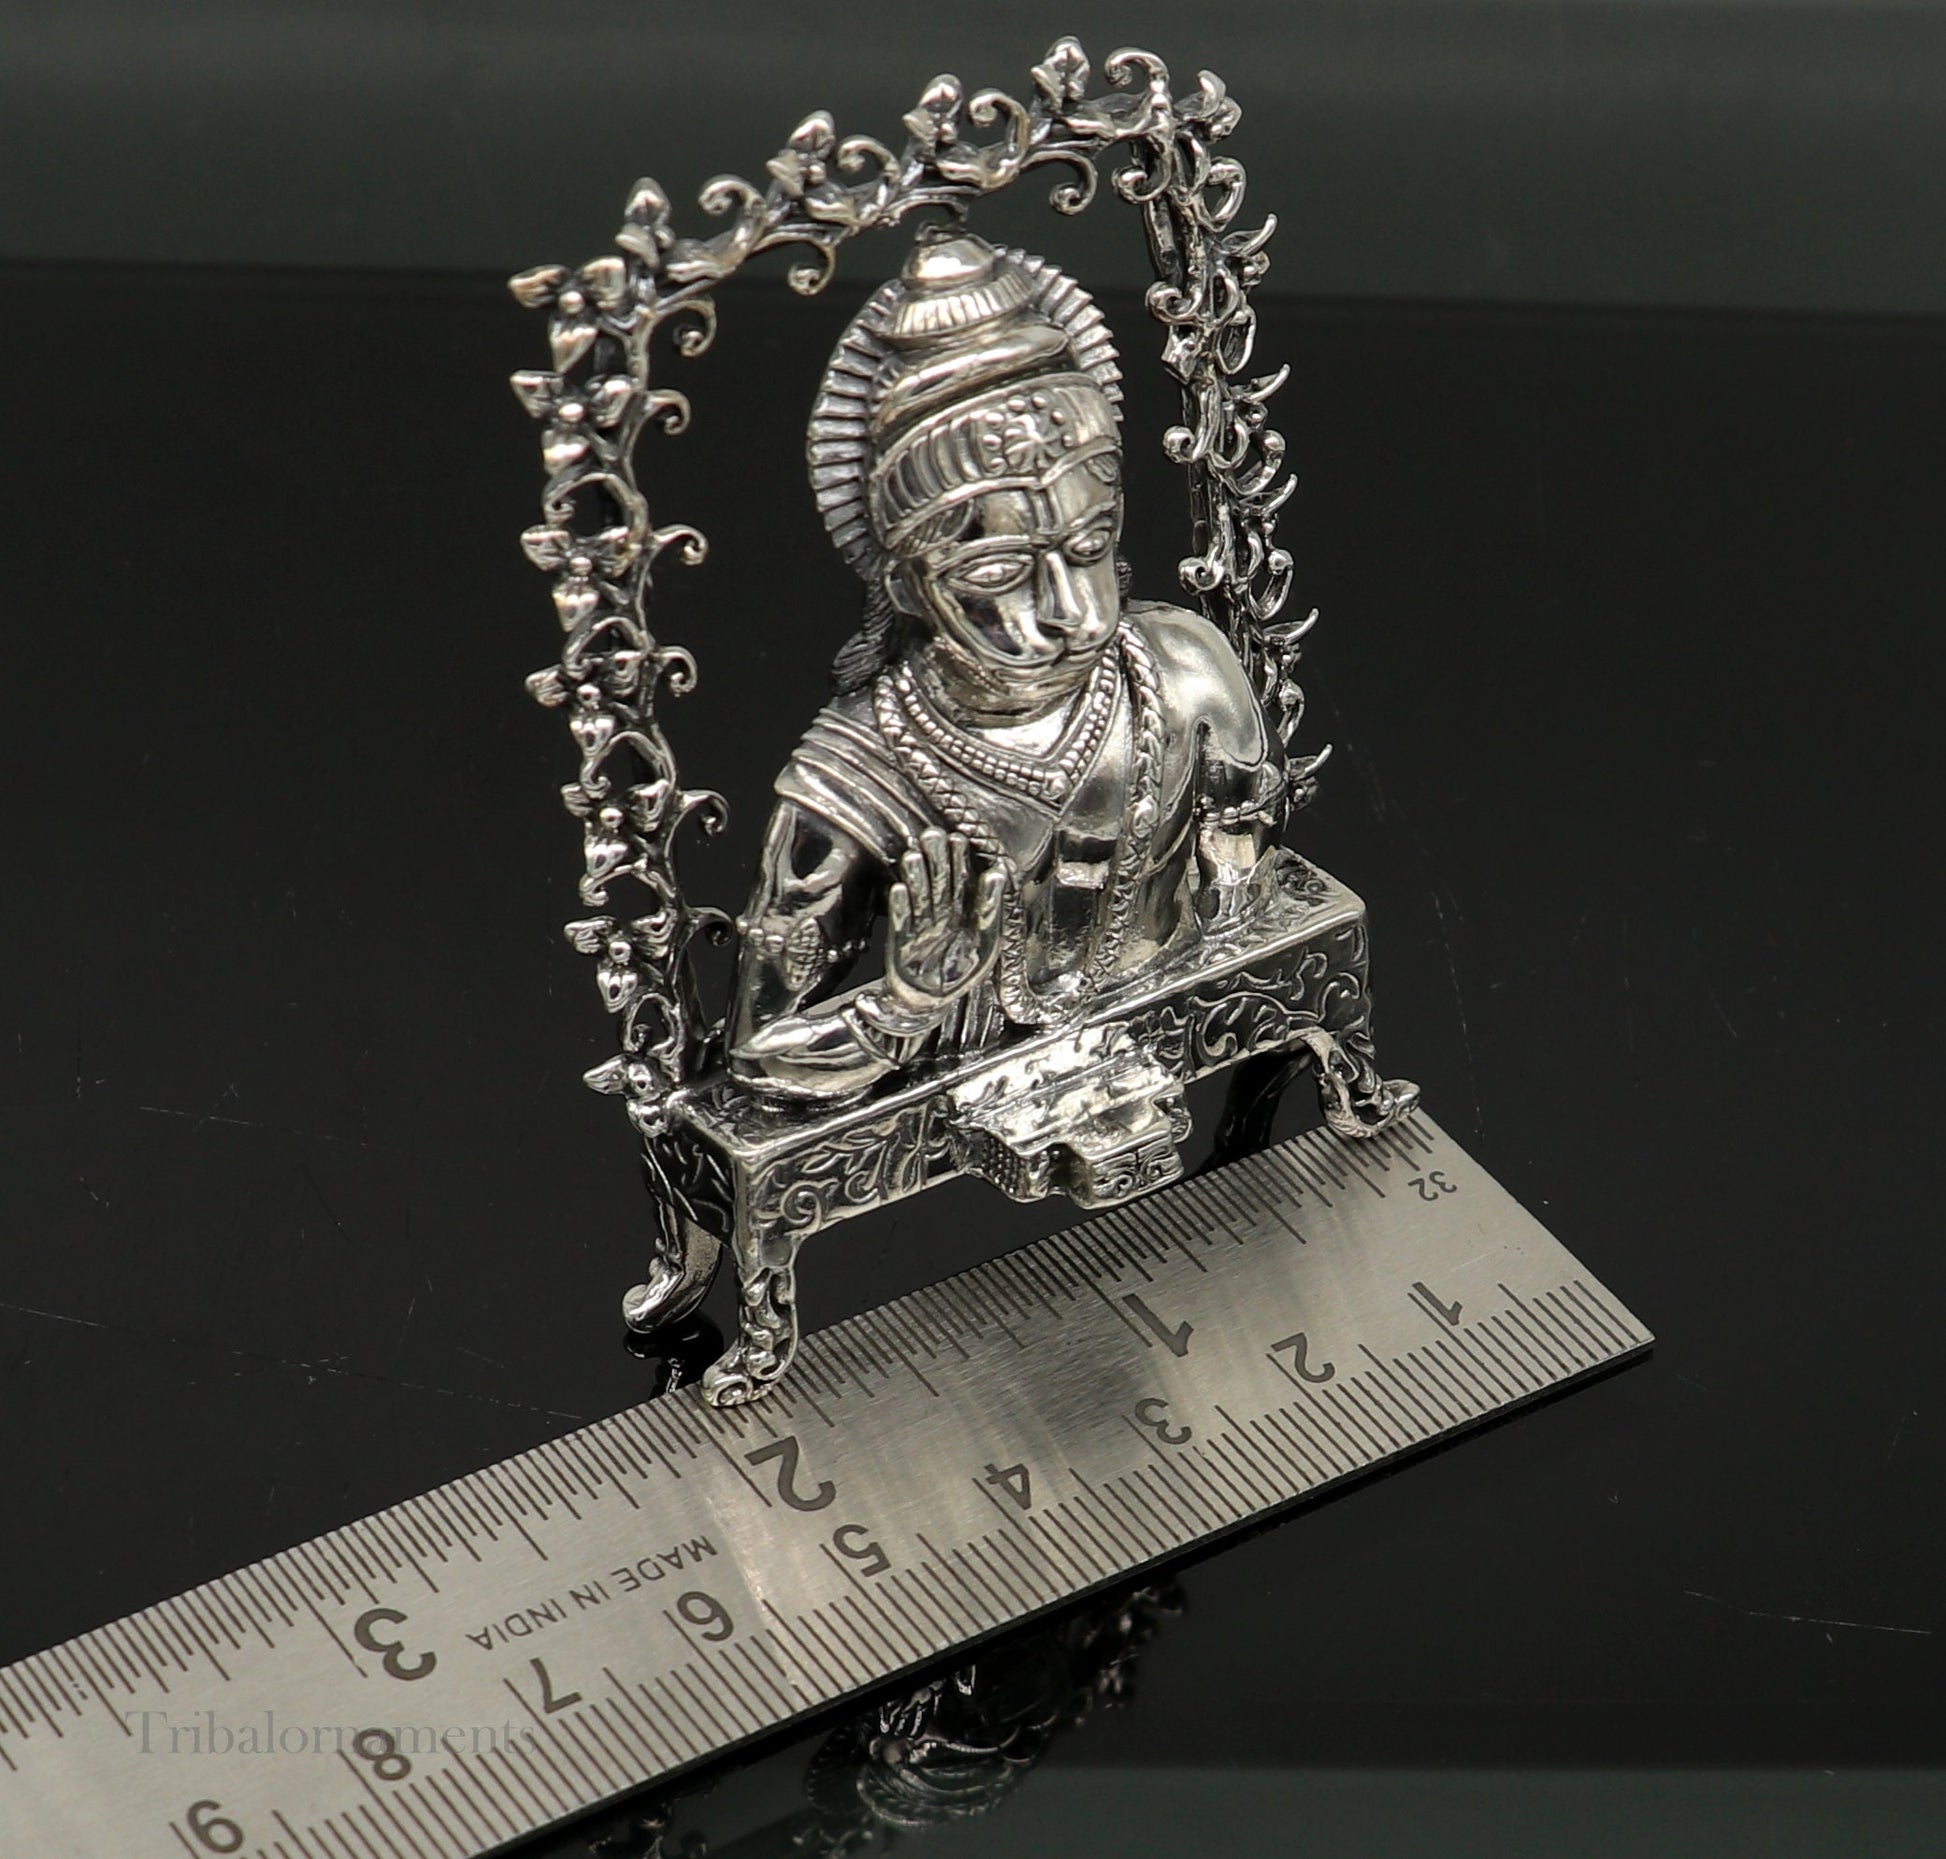 925 sterling silver handmade Divine Hindu god Lord Hanuman blessing Statue, amazing designer Divine Sculpture figurine puja article art169 - TRIBAL ORNAMENTS